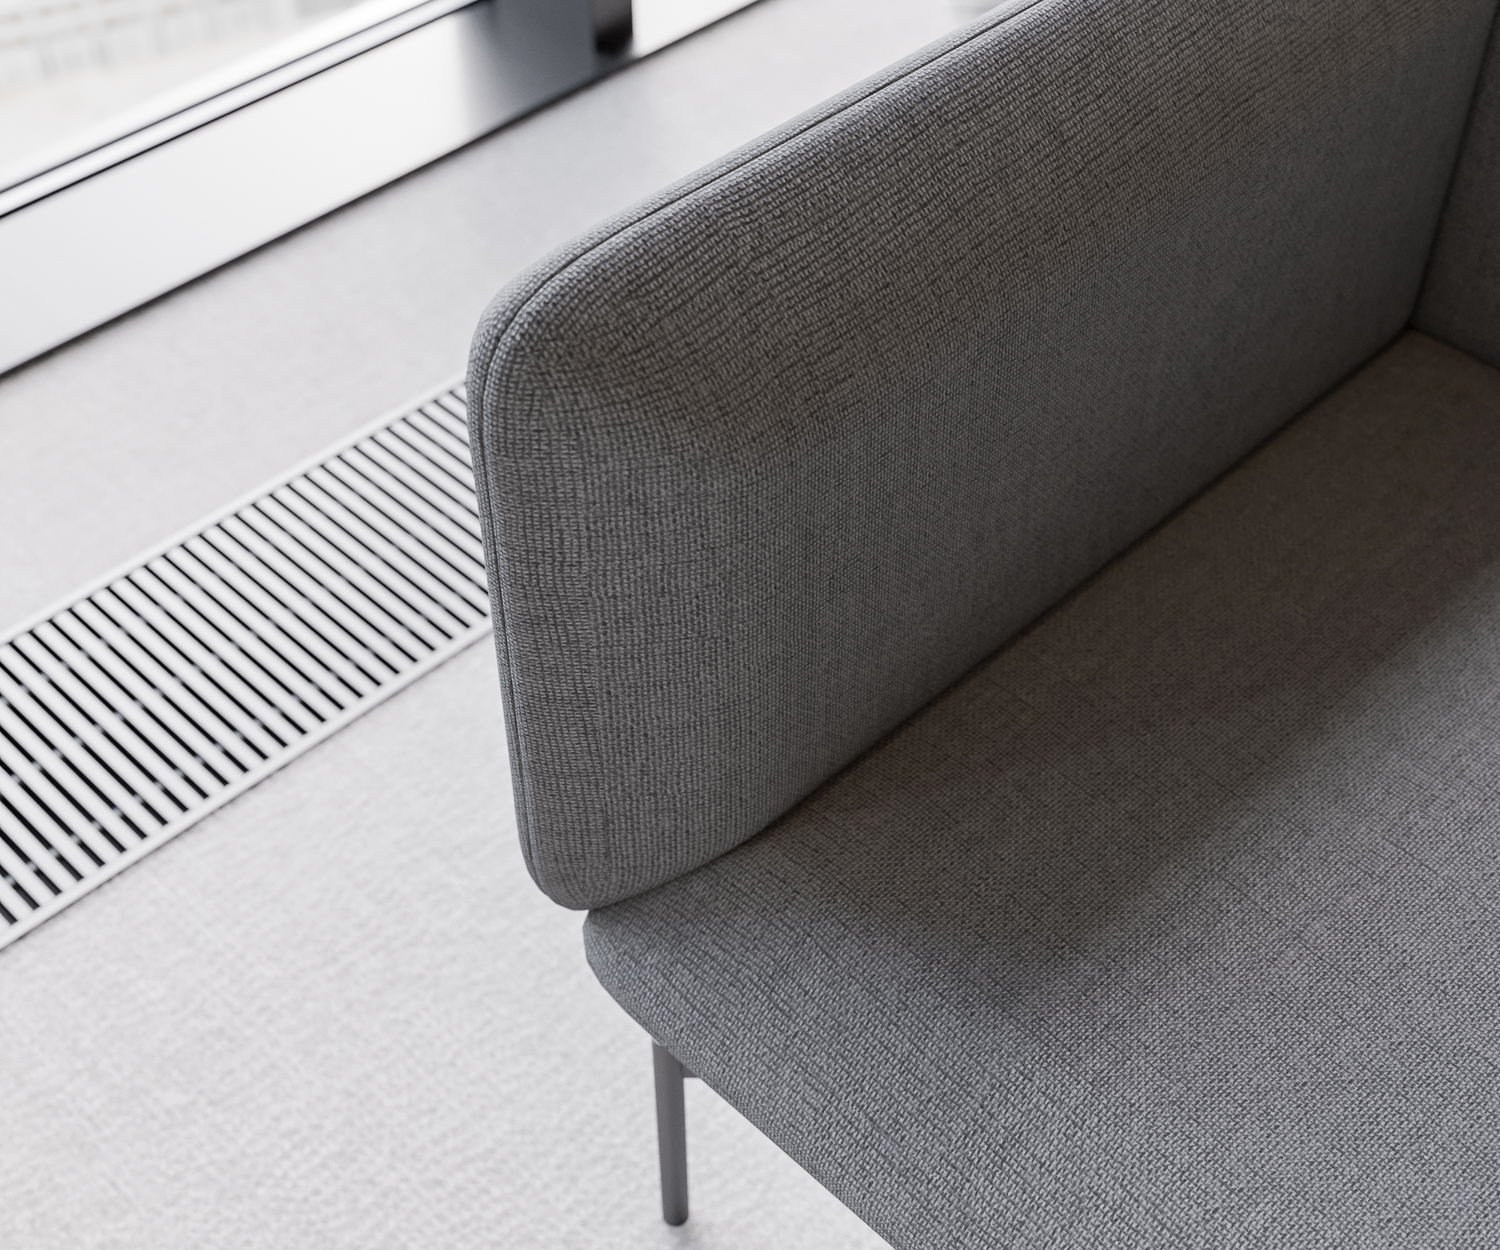 Exklusives Prostoria Design Sofa Segment in Schwarz